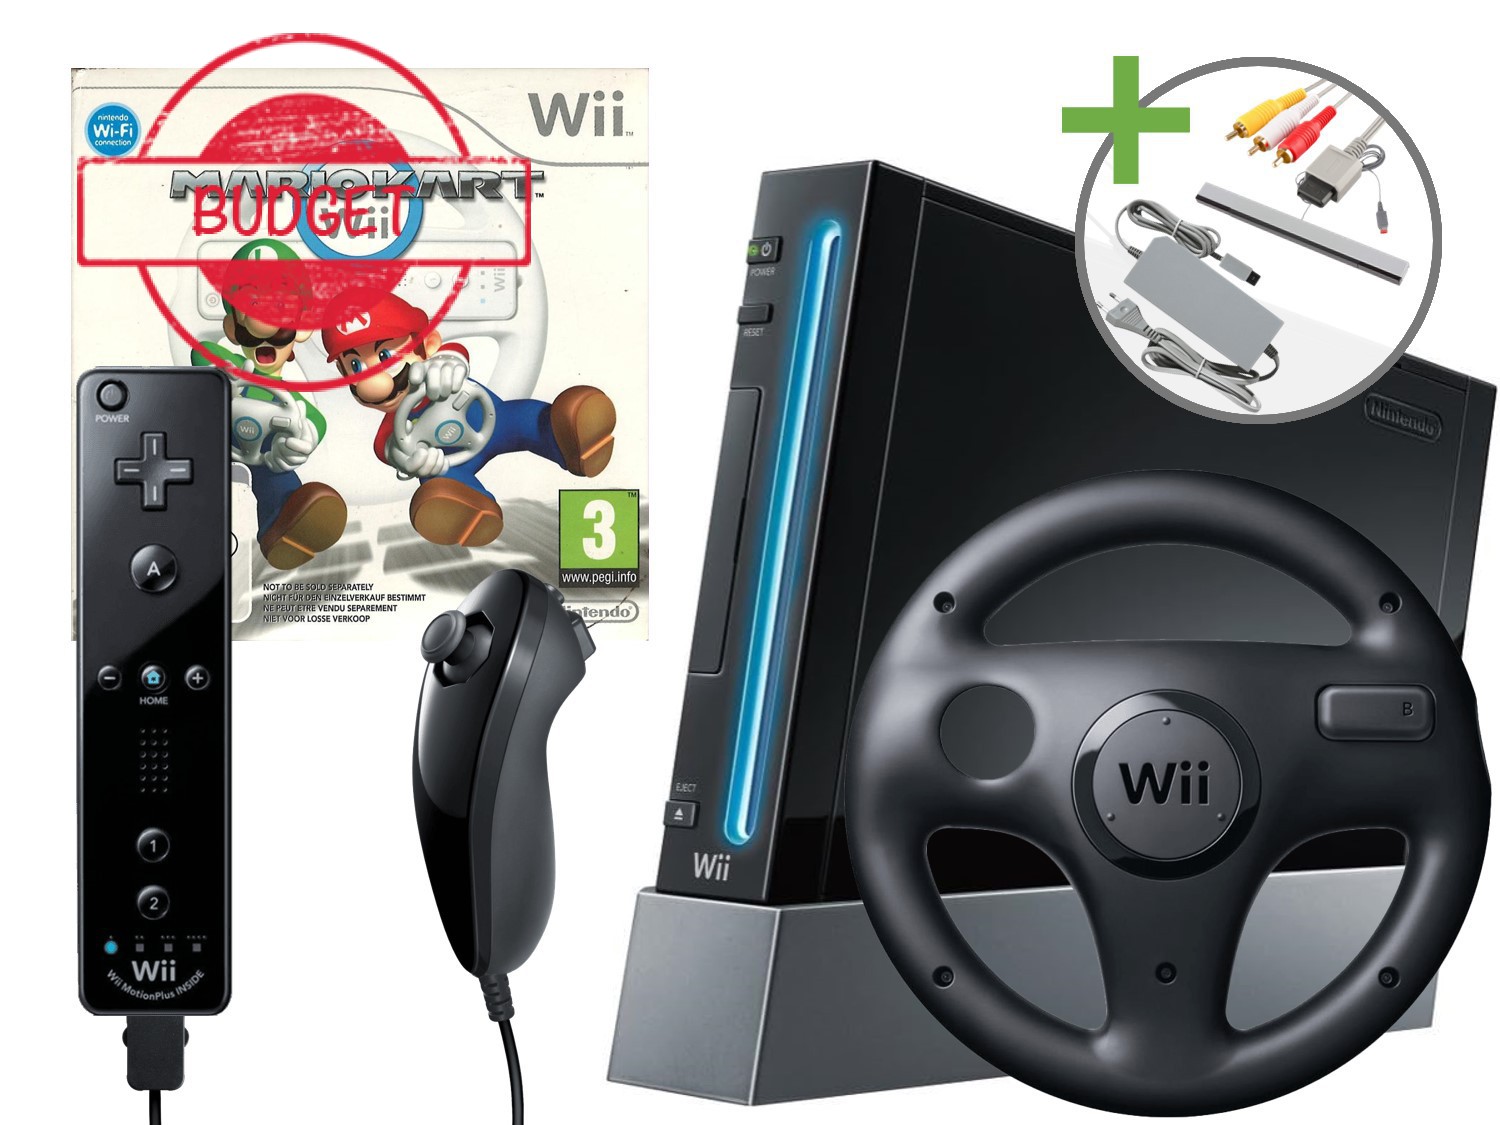 Nintendo Wii Starter Pack - Mario Kart Motion Plus Black Edition - Budget - Wii Hardware